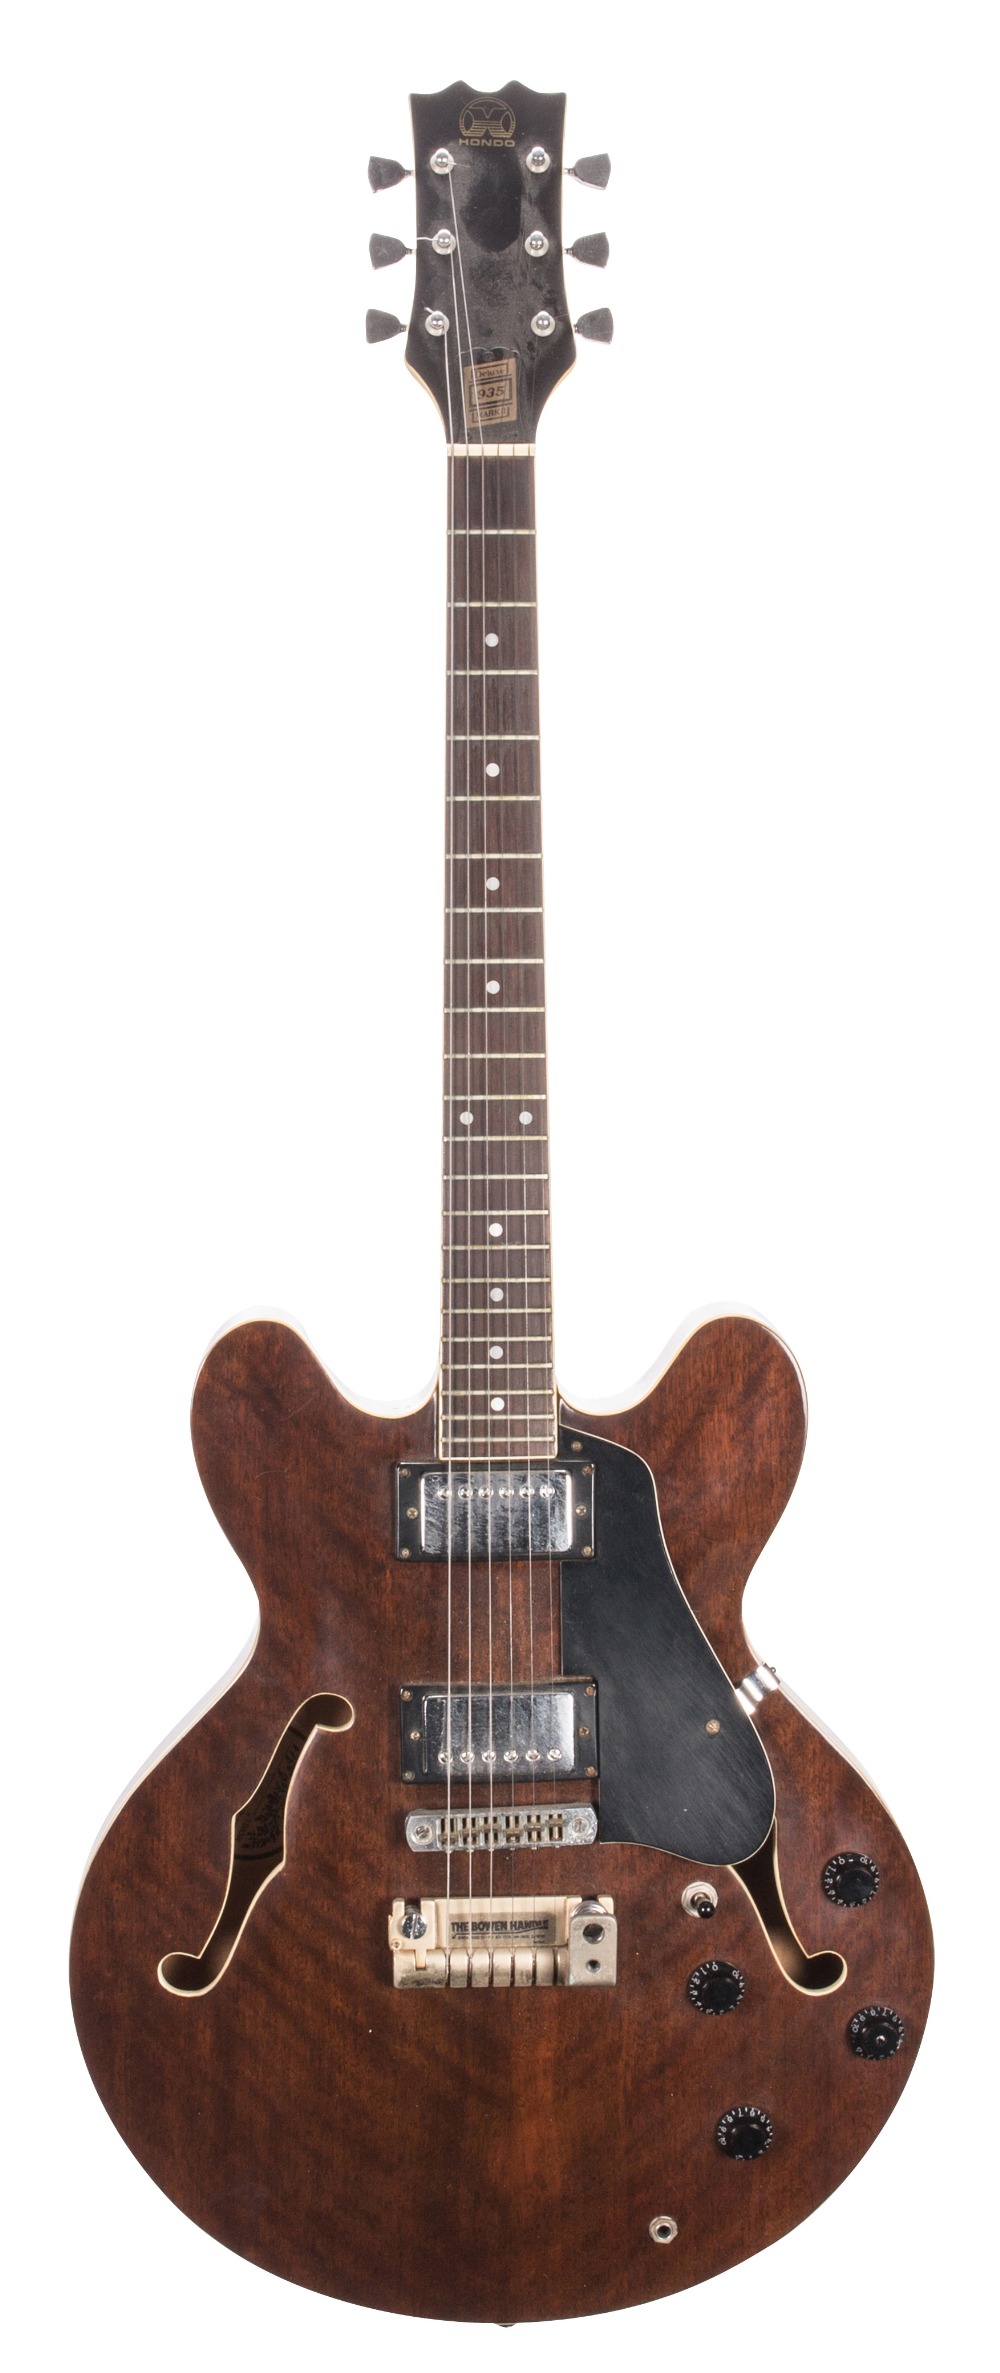 Hondo H935 Deluxe Mark II semi hollow body electric guitar, made in Korea; Finish: walnut, minor